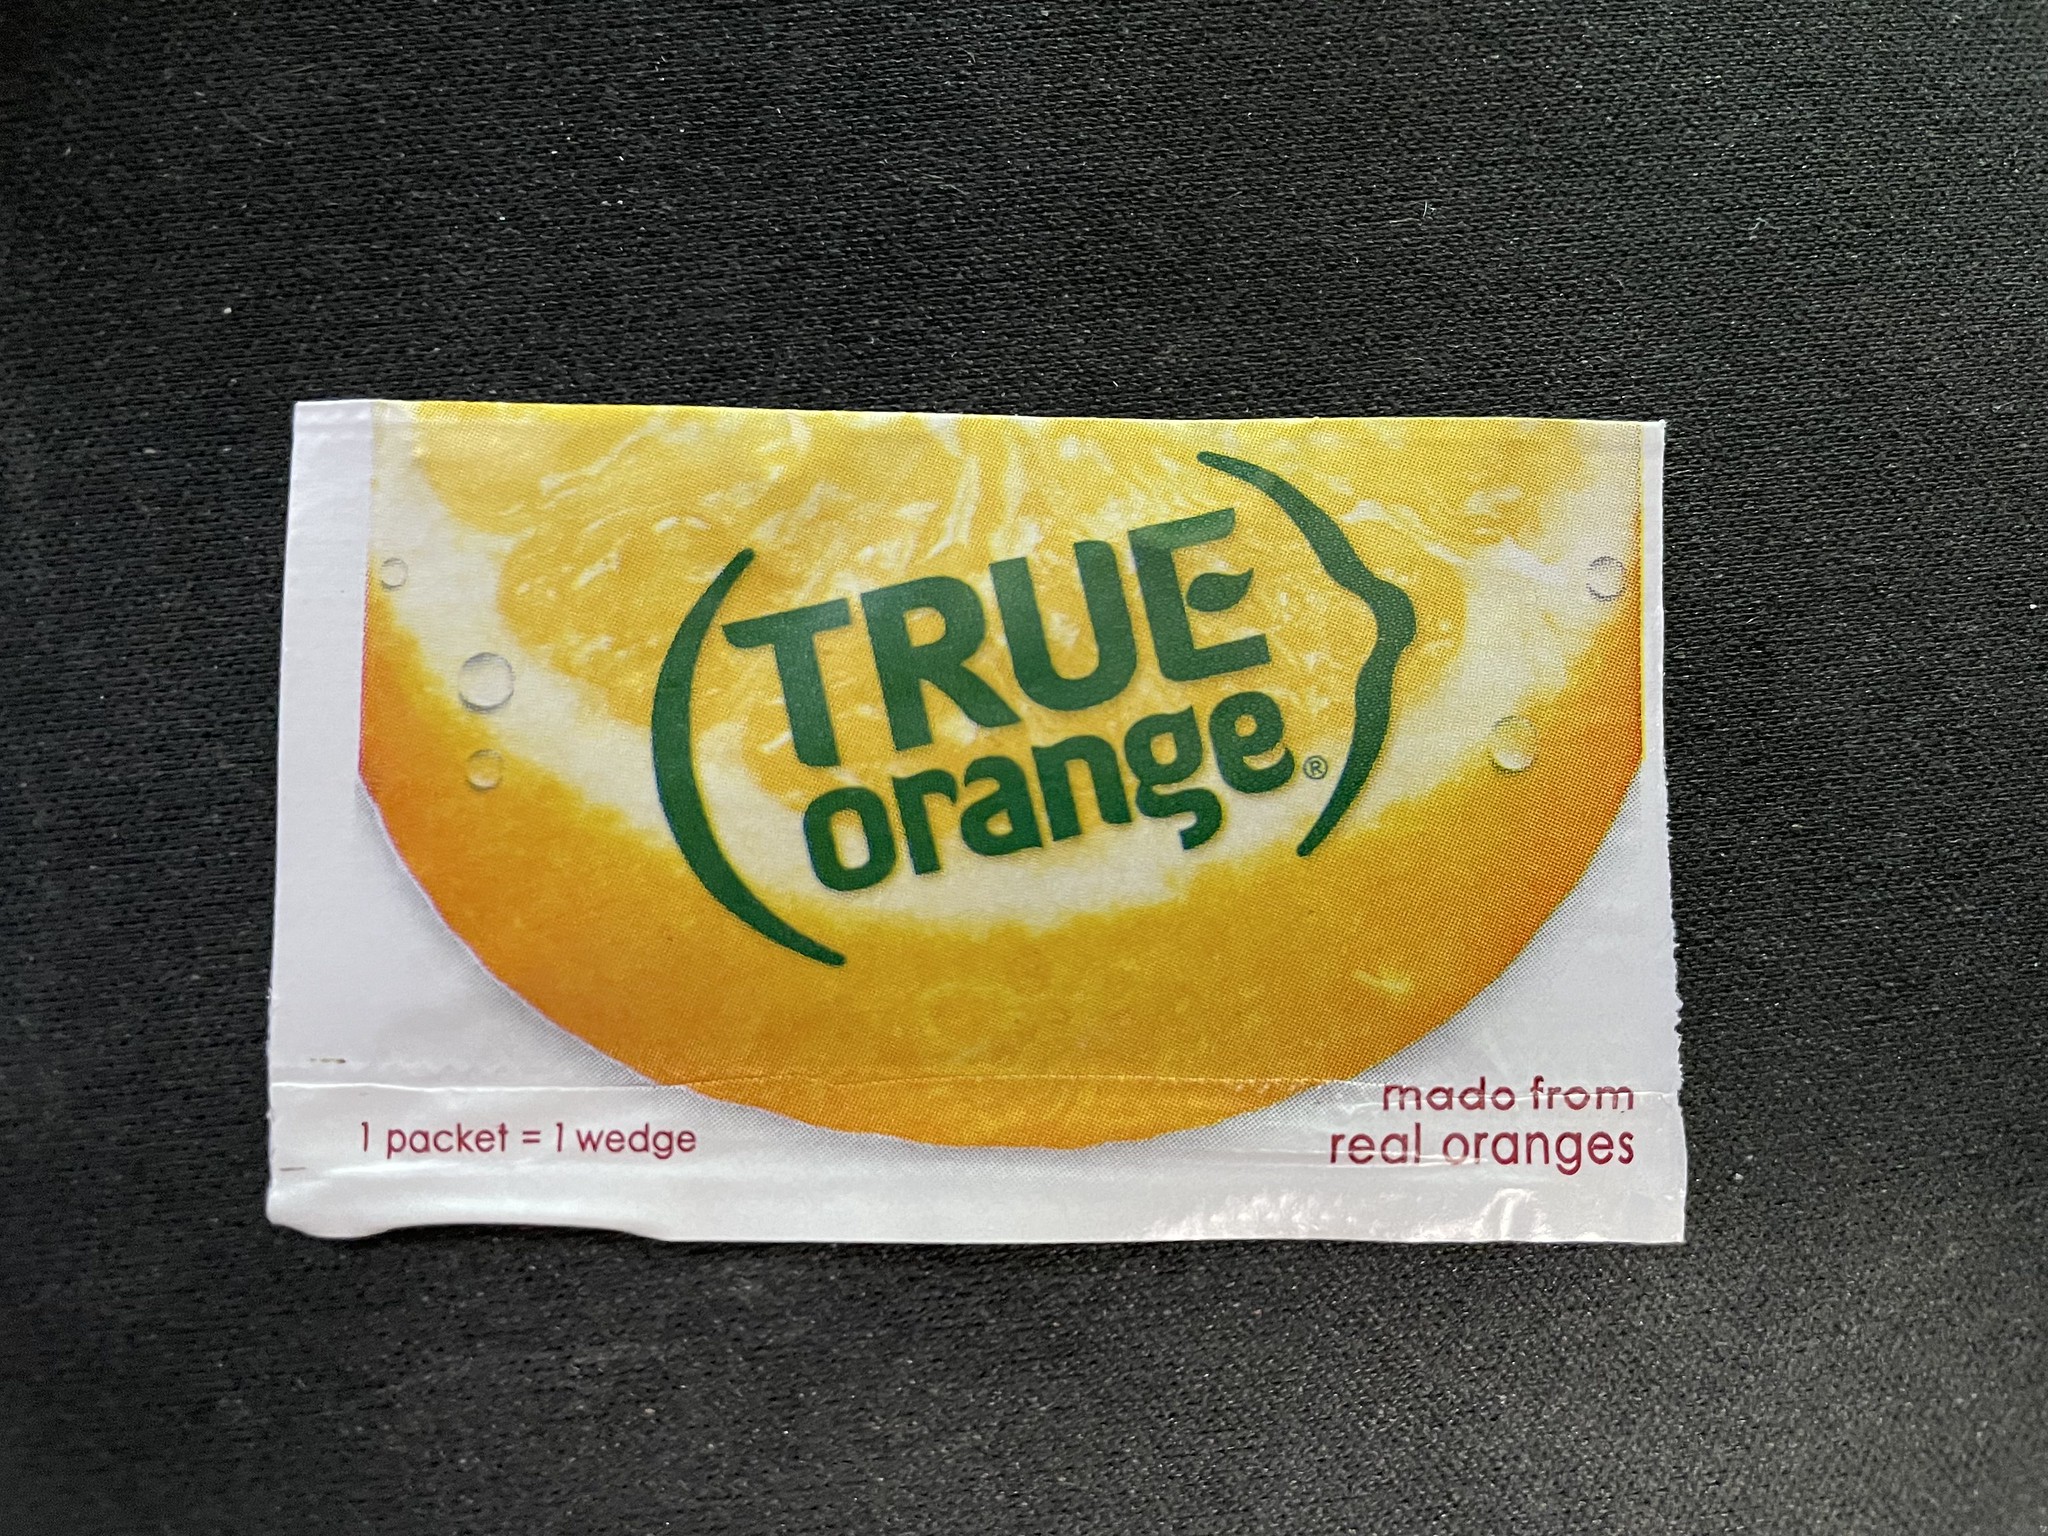 Tru Orange!